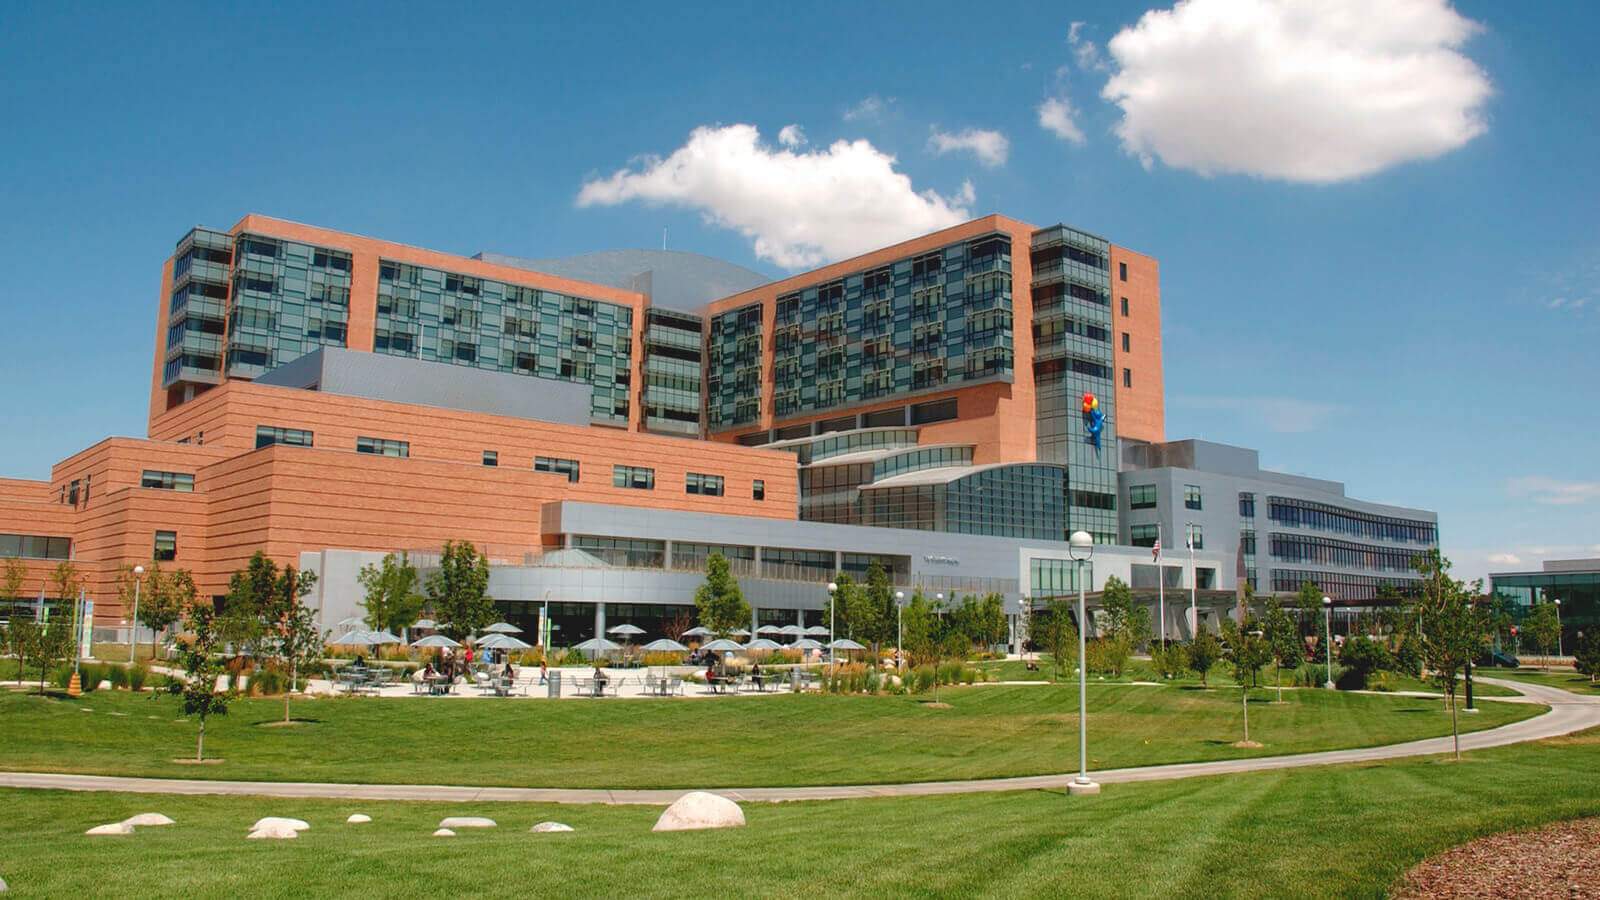 University of Colorado Denver/Anschutz Medical Campus